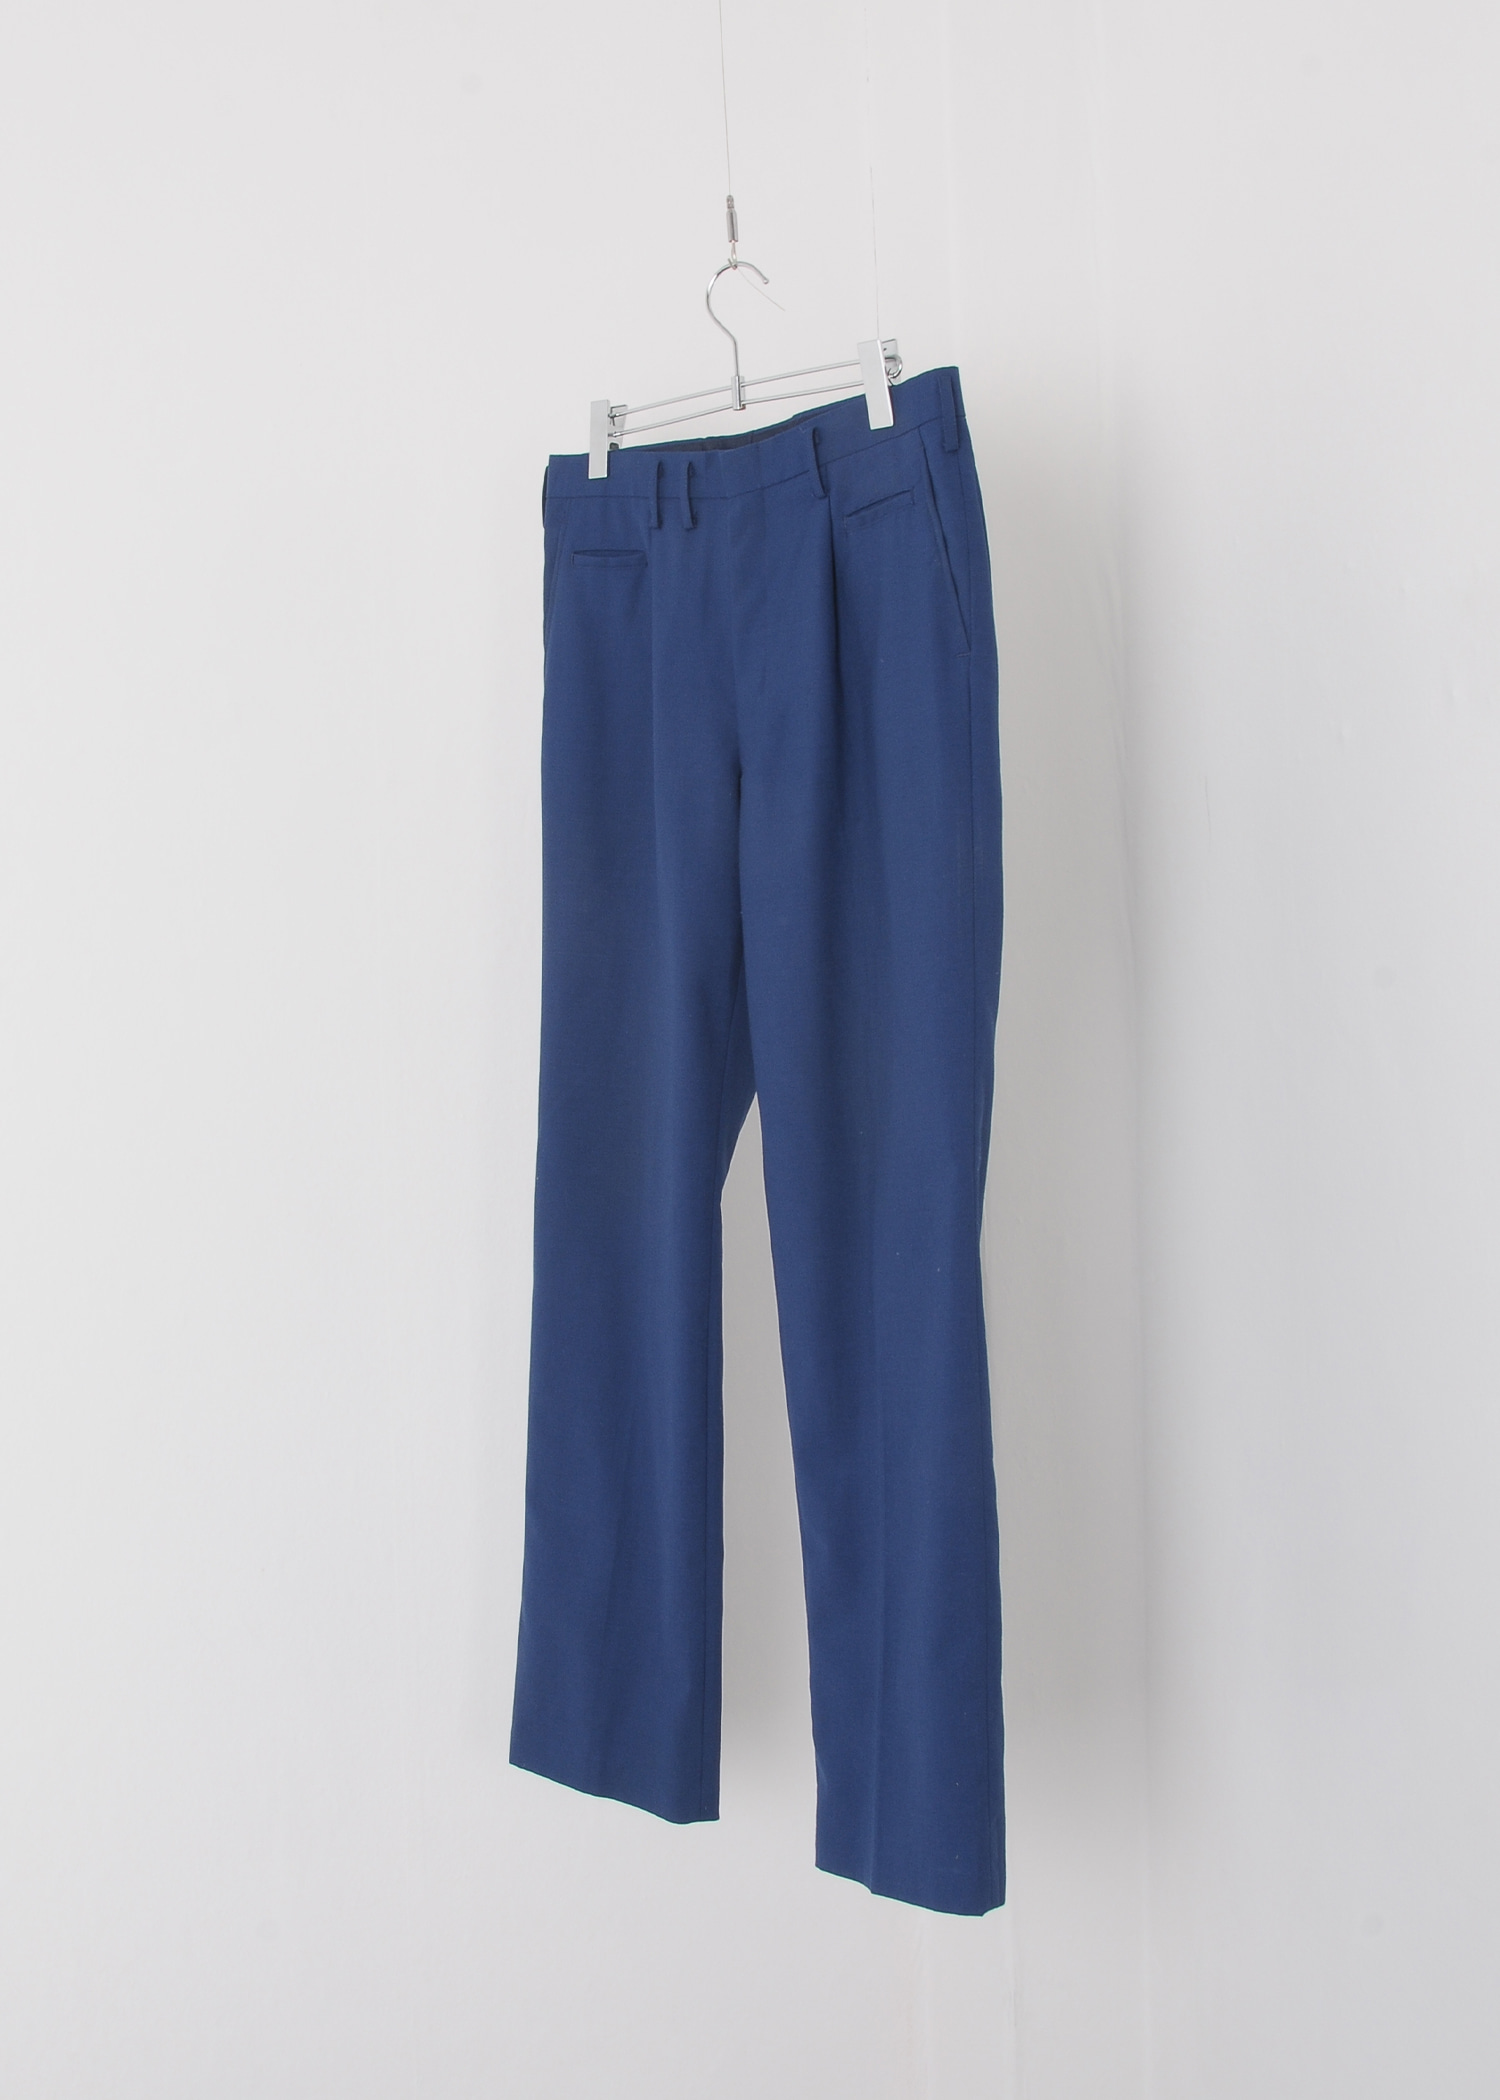 select vintage : blue slacks